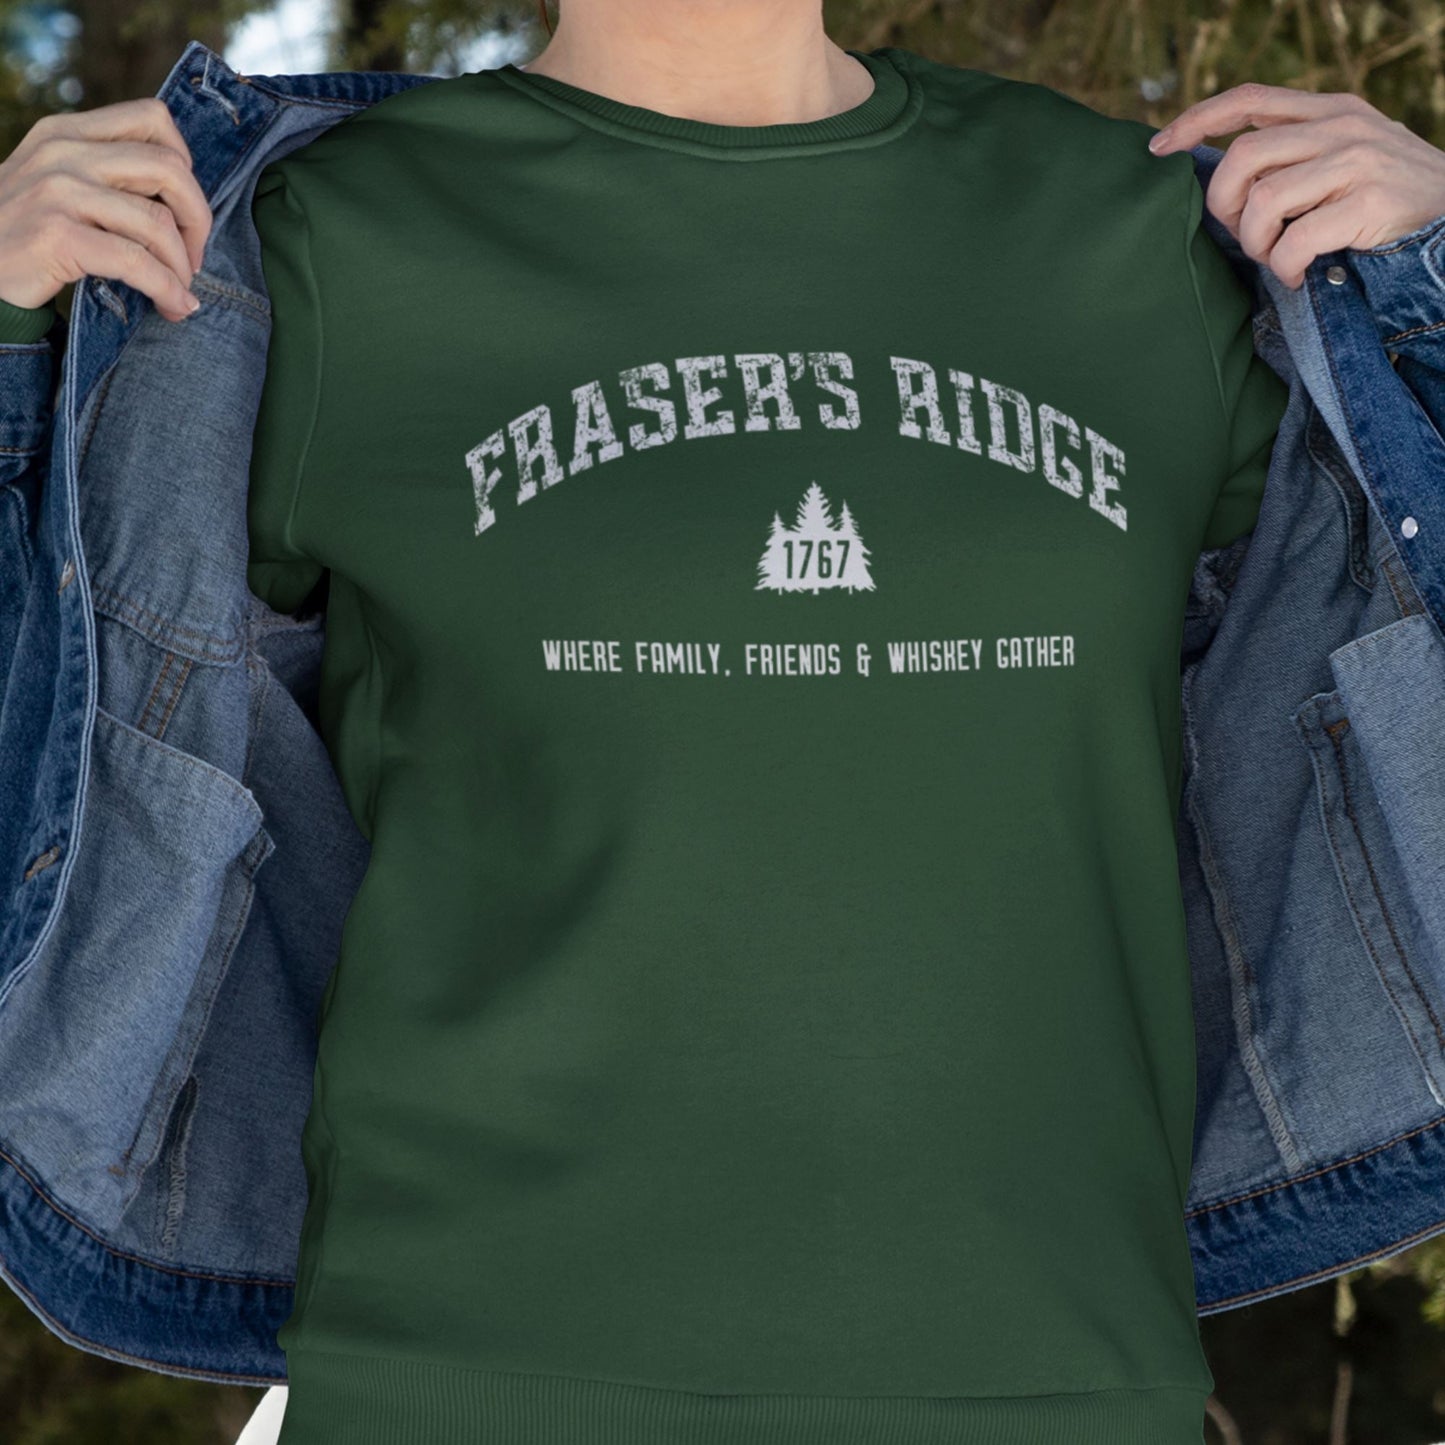 Fraser's Ridge Crewneck Sweatshirt • Unisex Style Sweatshirts CustomCat 